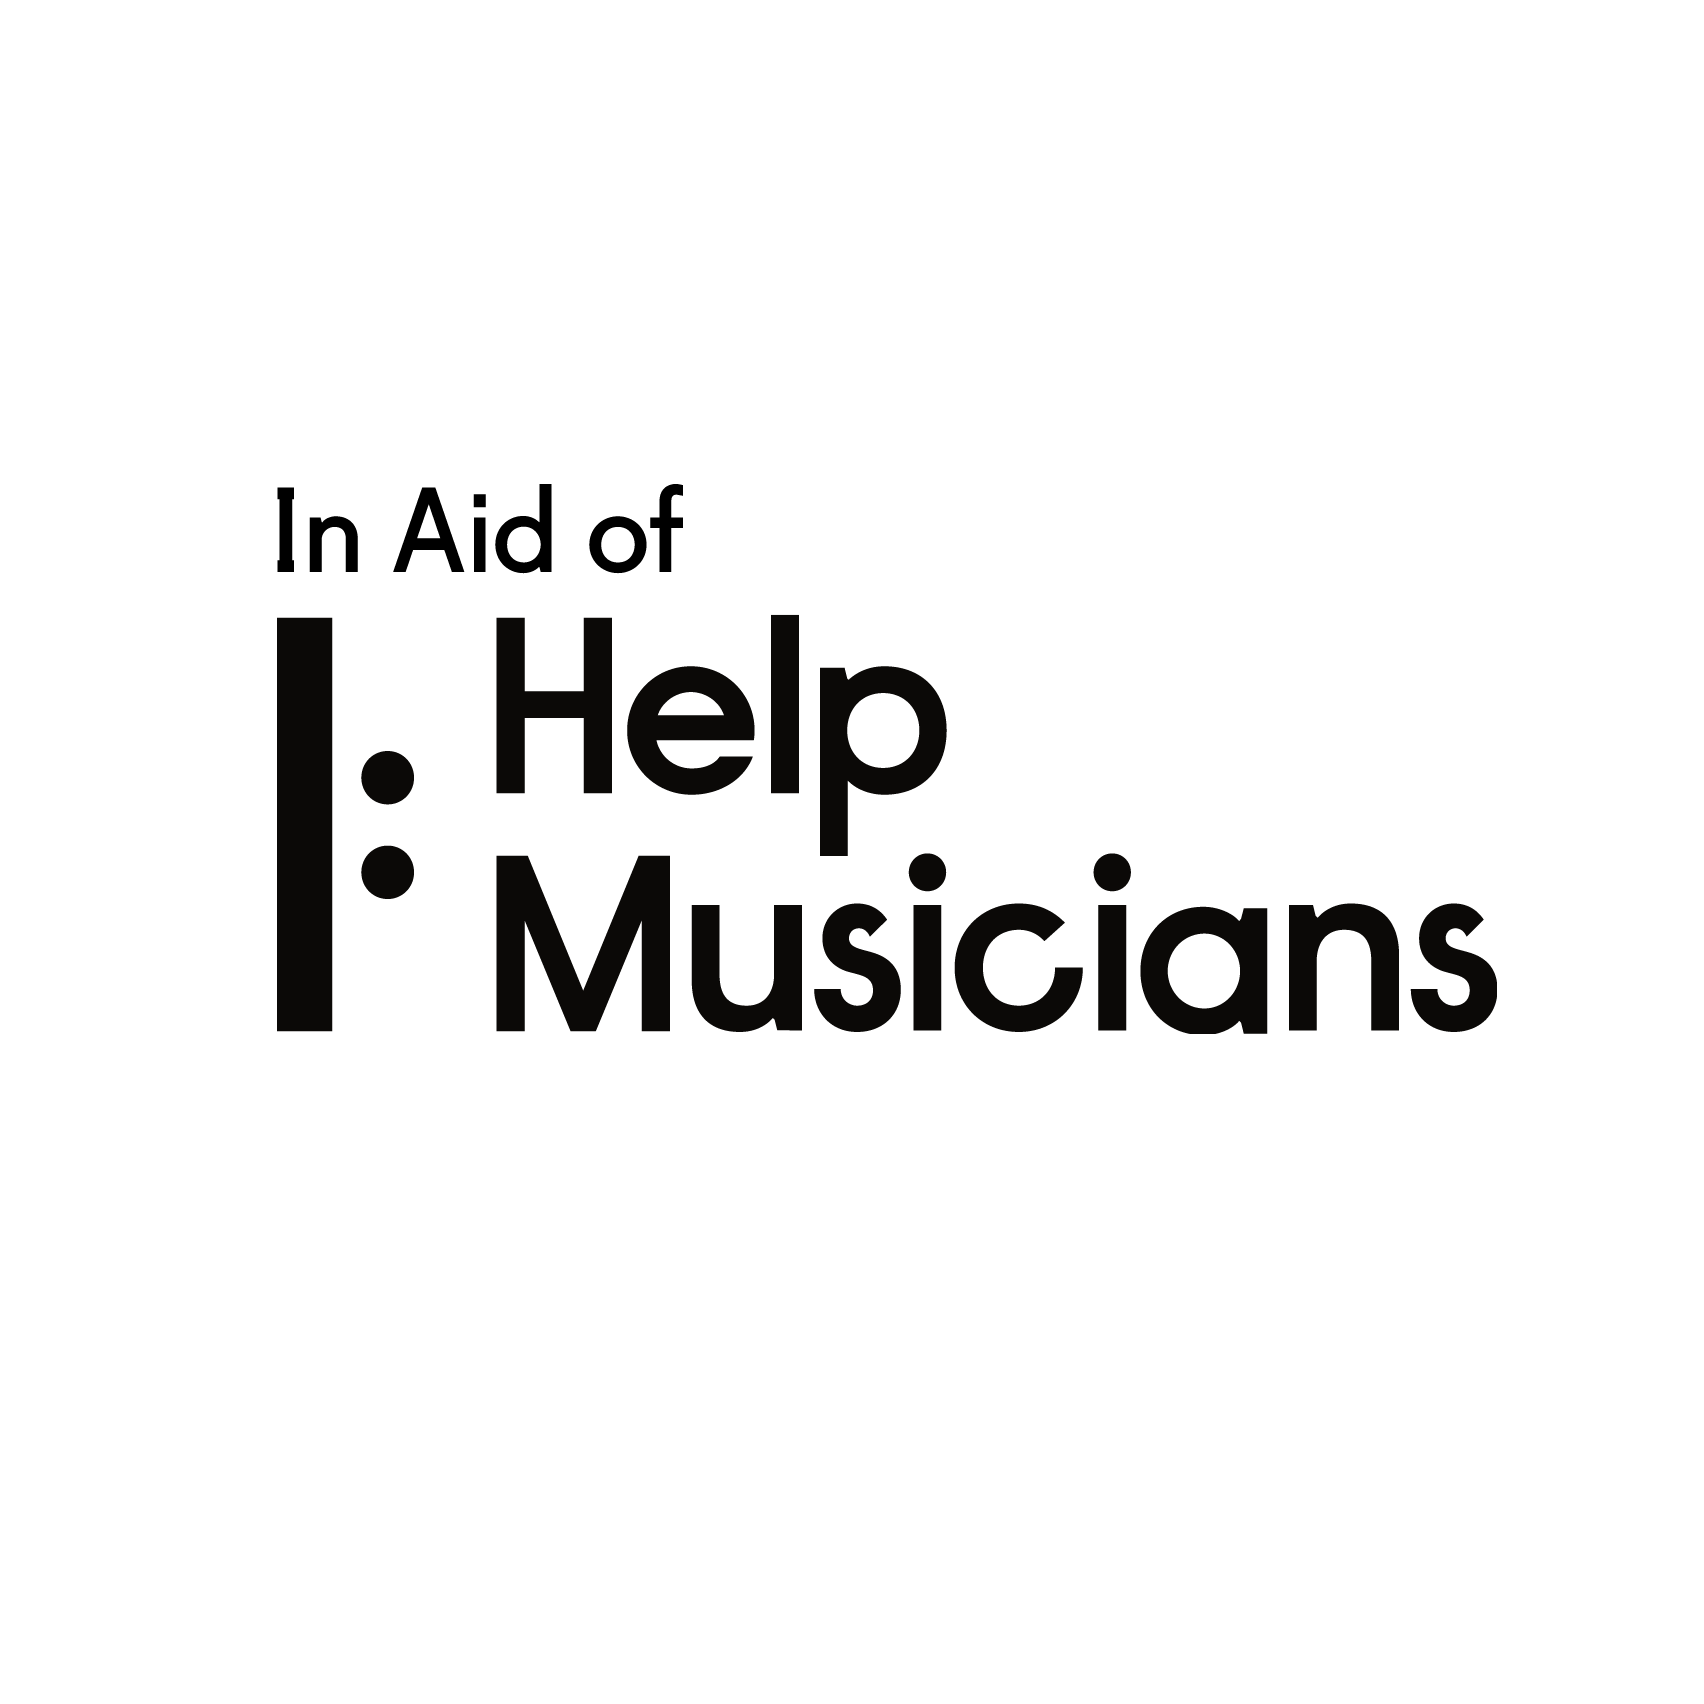 Help Musicians Album Experience